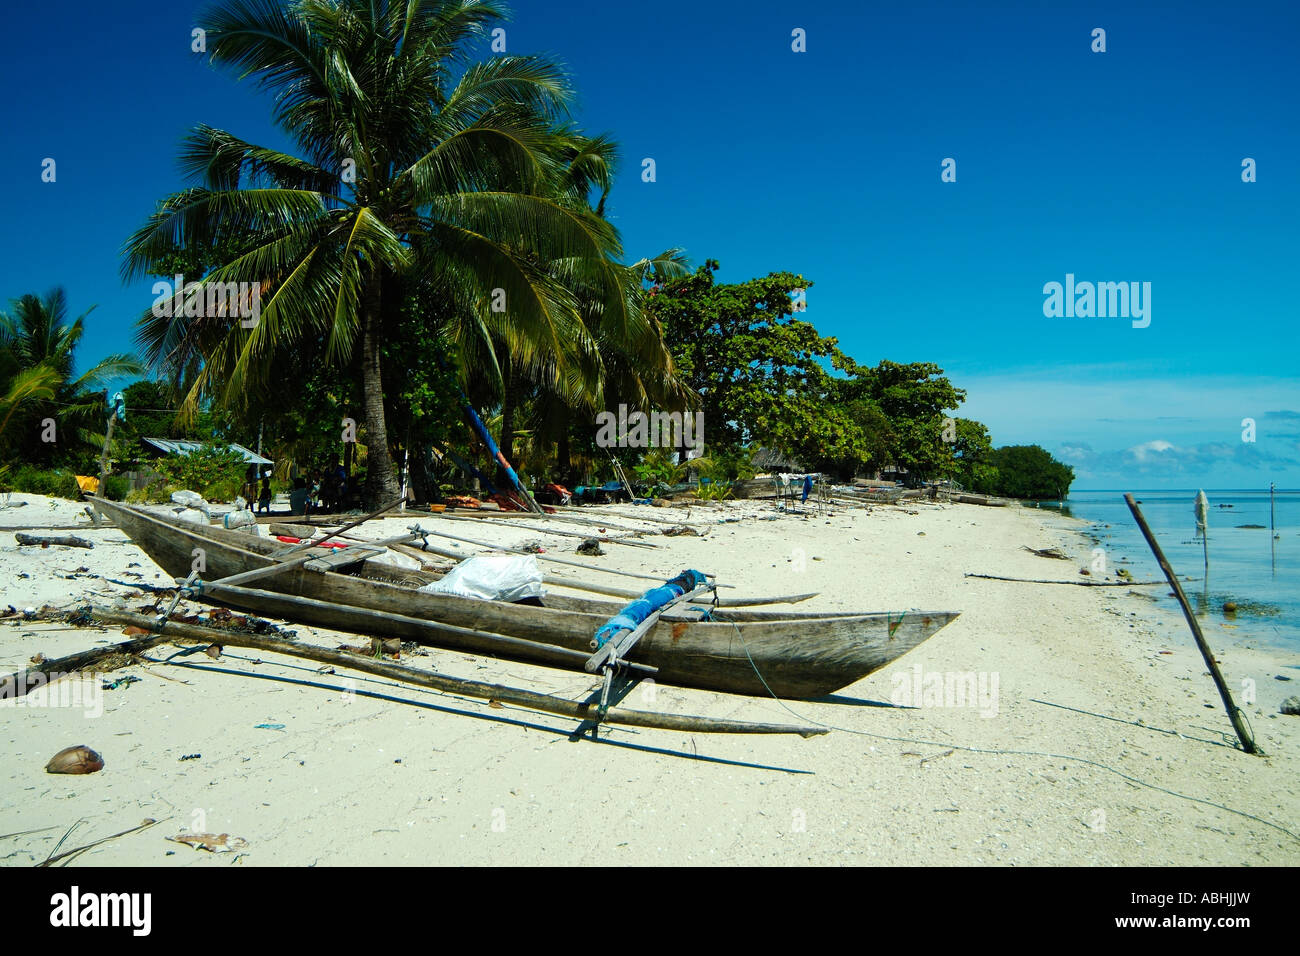 Wooden boat, Small island in Raja Ampat Archipelago, Indonesia Stock Photo